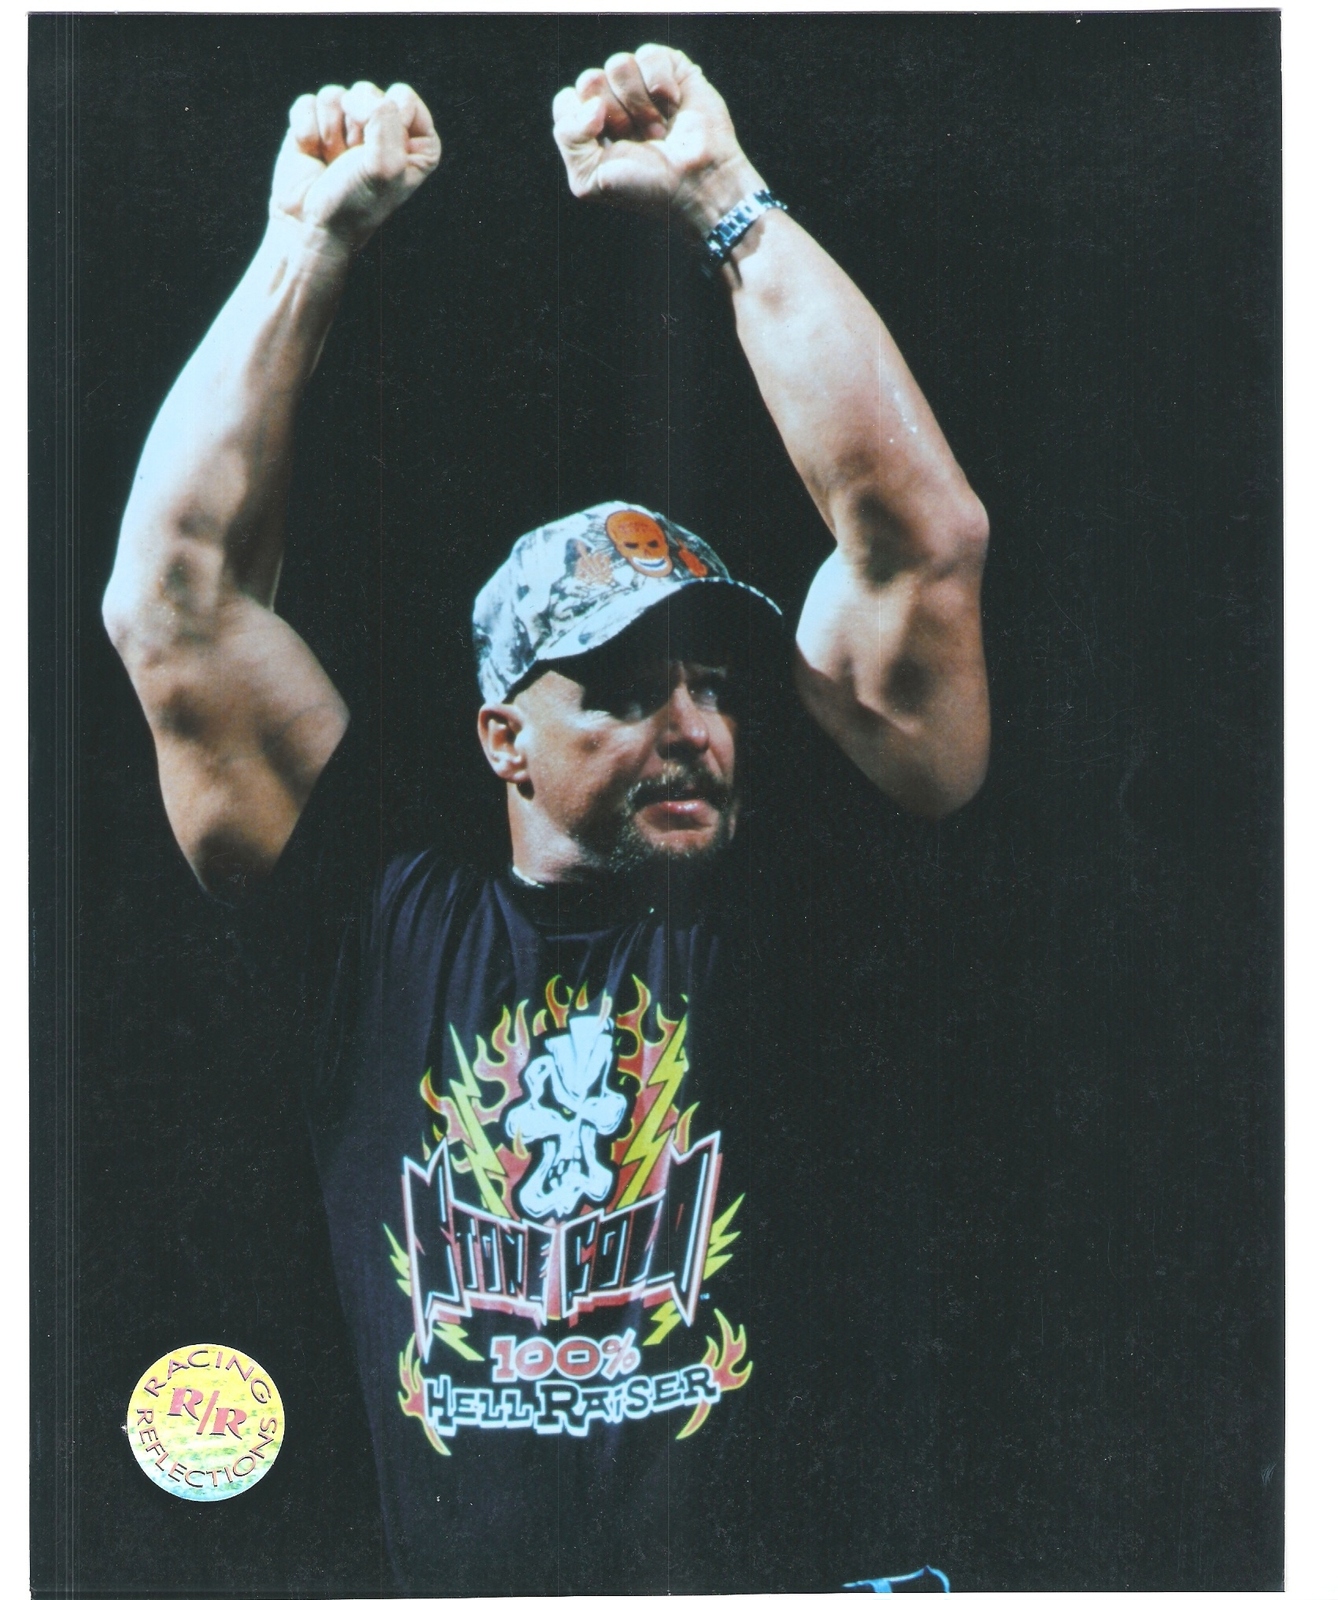 Steve Austin RR RH RR Vintage 8X10 Color Wrestling Memorabilia Photo - $4.99